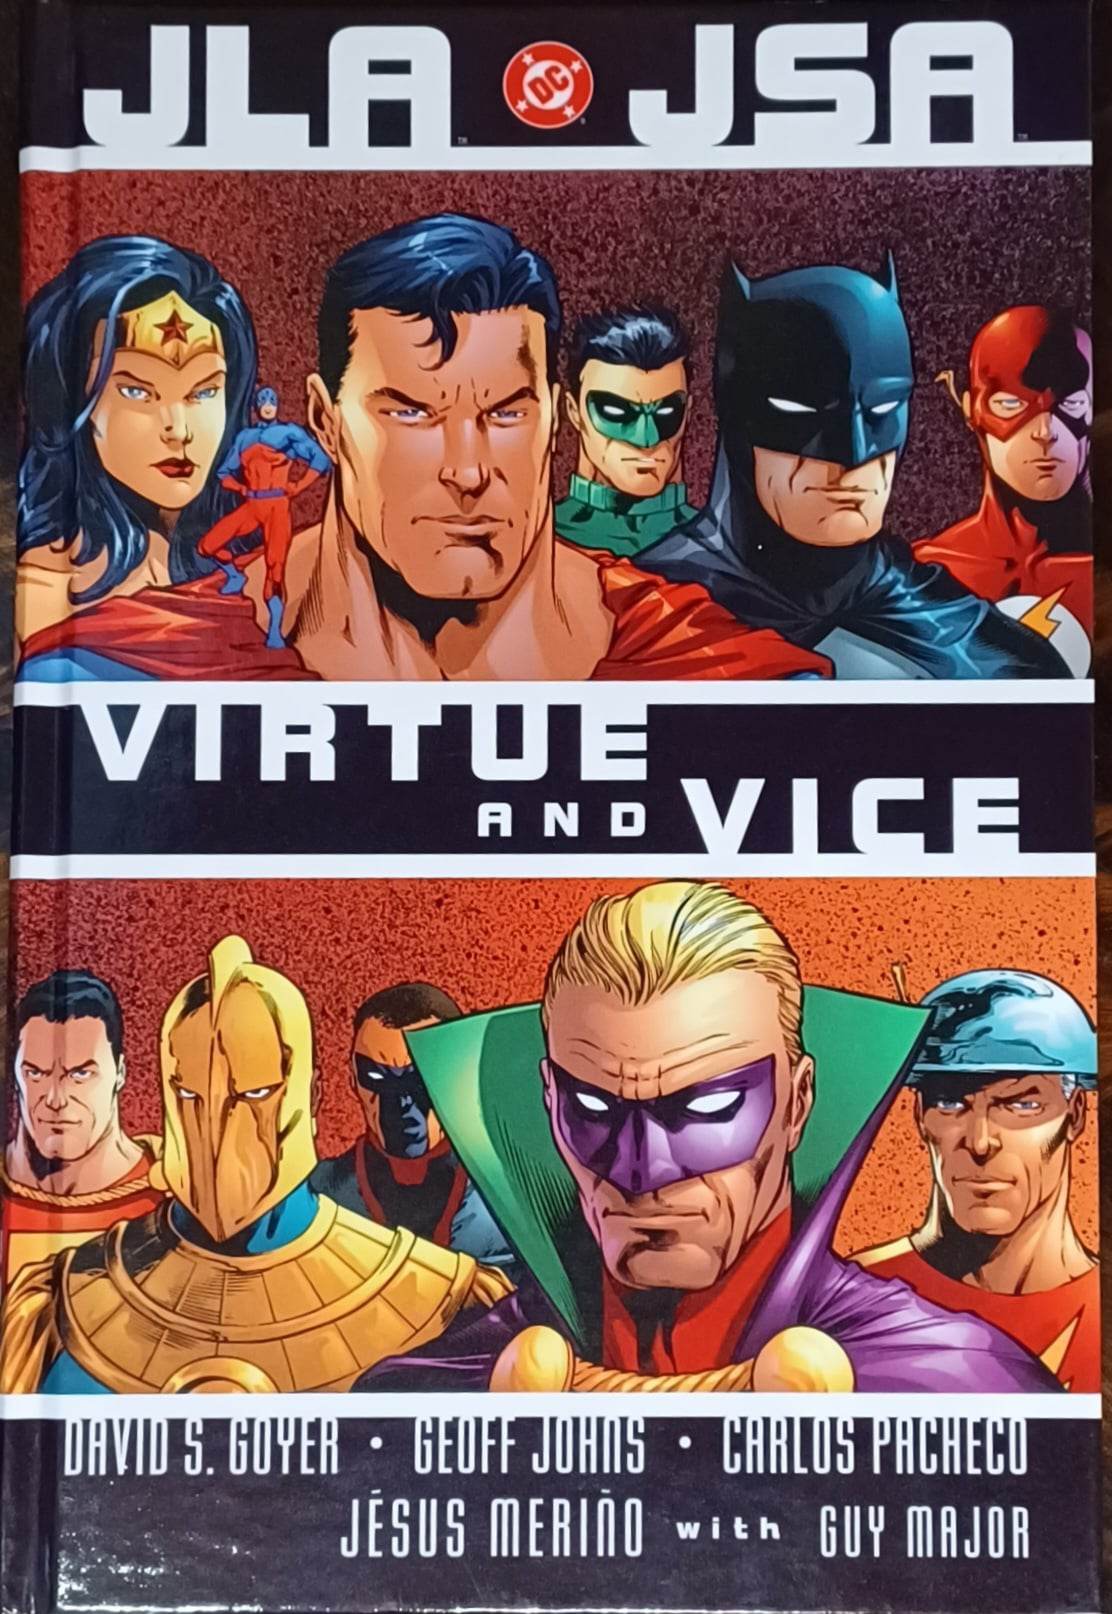 JLA JSA Virtue and Vice Hardcover Graphic Novel